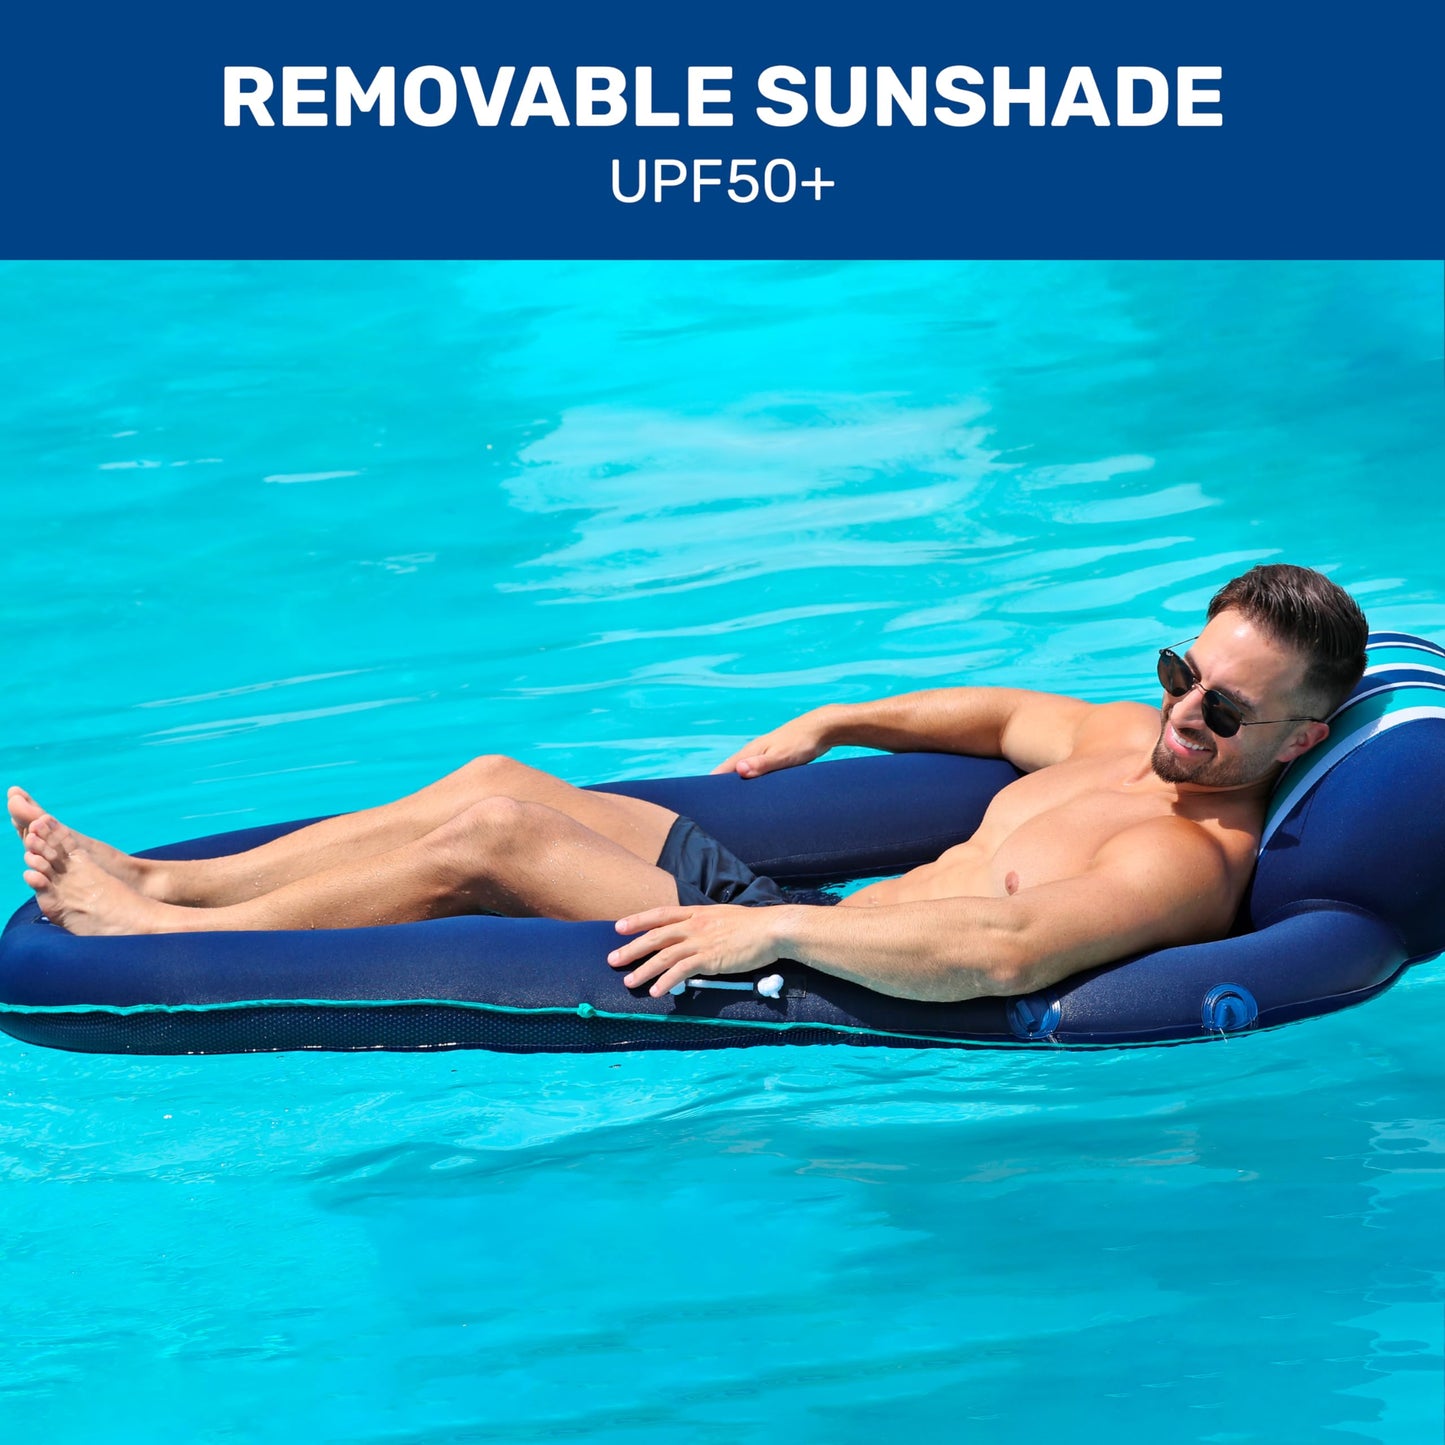 Aqua Oversized Ultimate Pool Lounger, Inflatable Pool Float with UPF 50 Sunshade Canopy, Heavy Duty, X-Large, Navy/Aqua/White Stripe